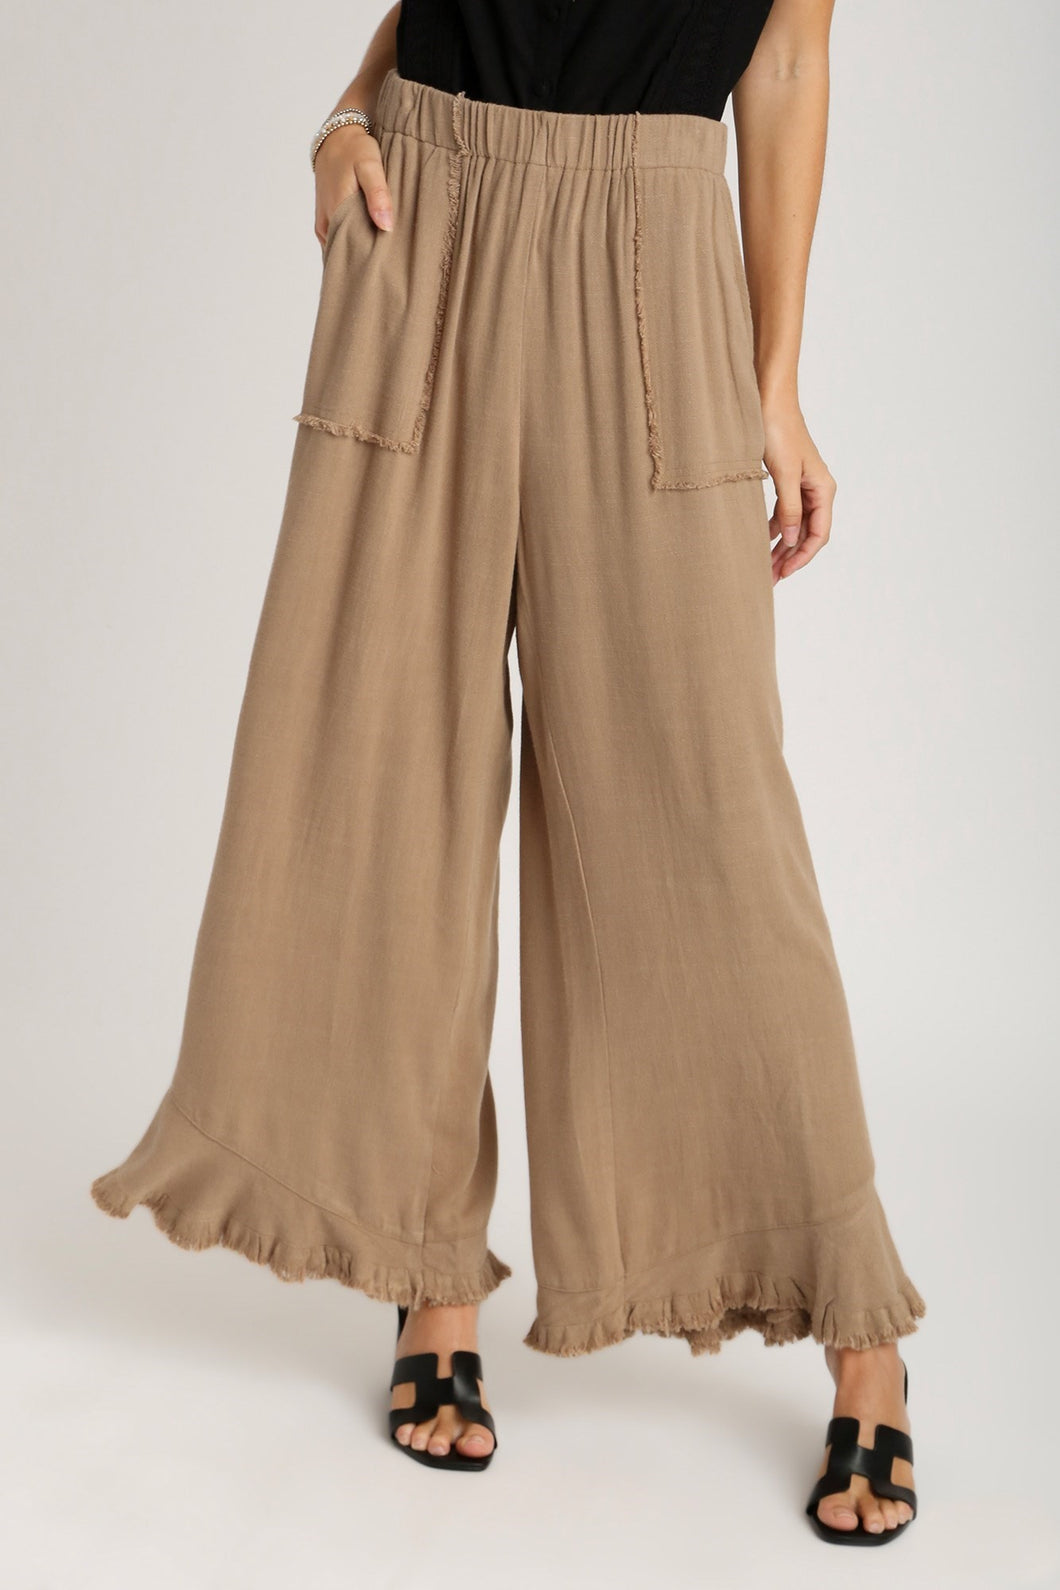 Umgee Solid Color Linen Blend Wide Leg Pants in Latte – June Adel